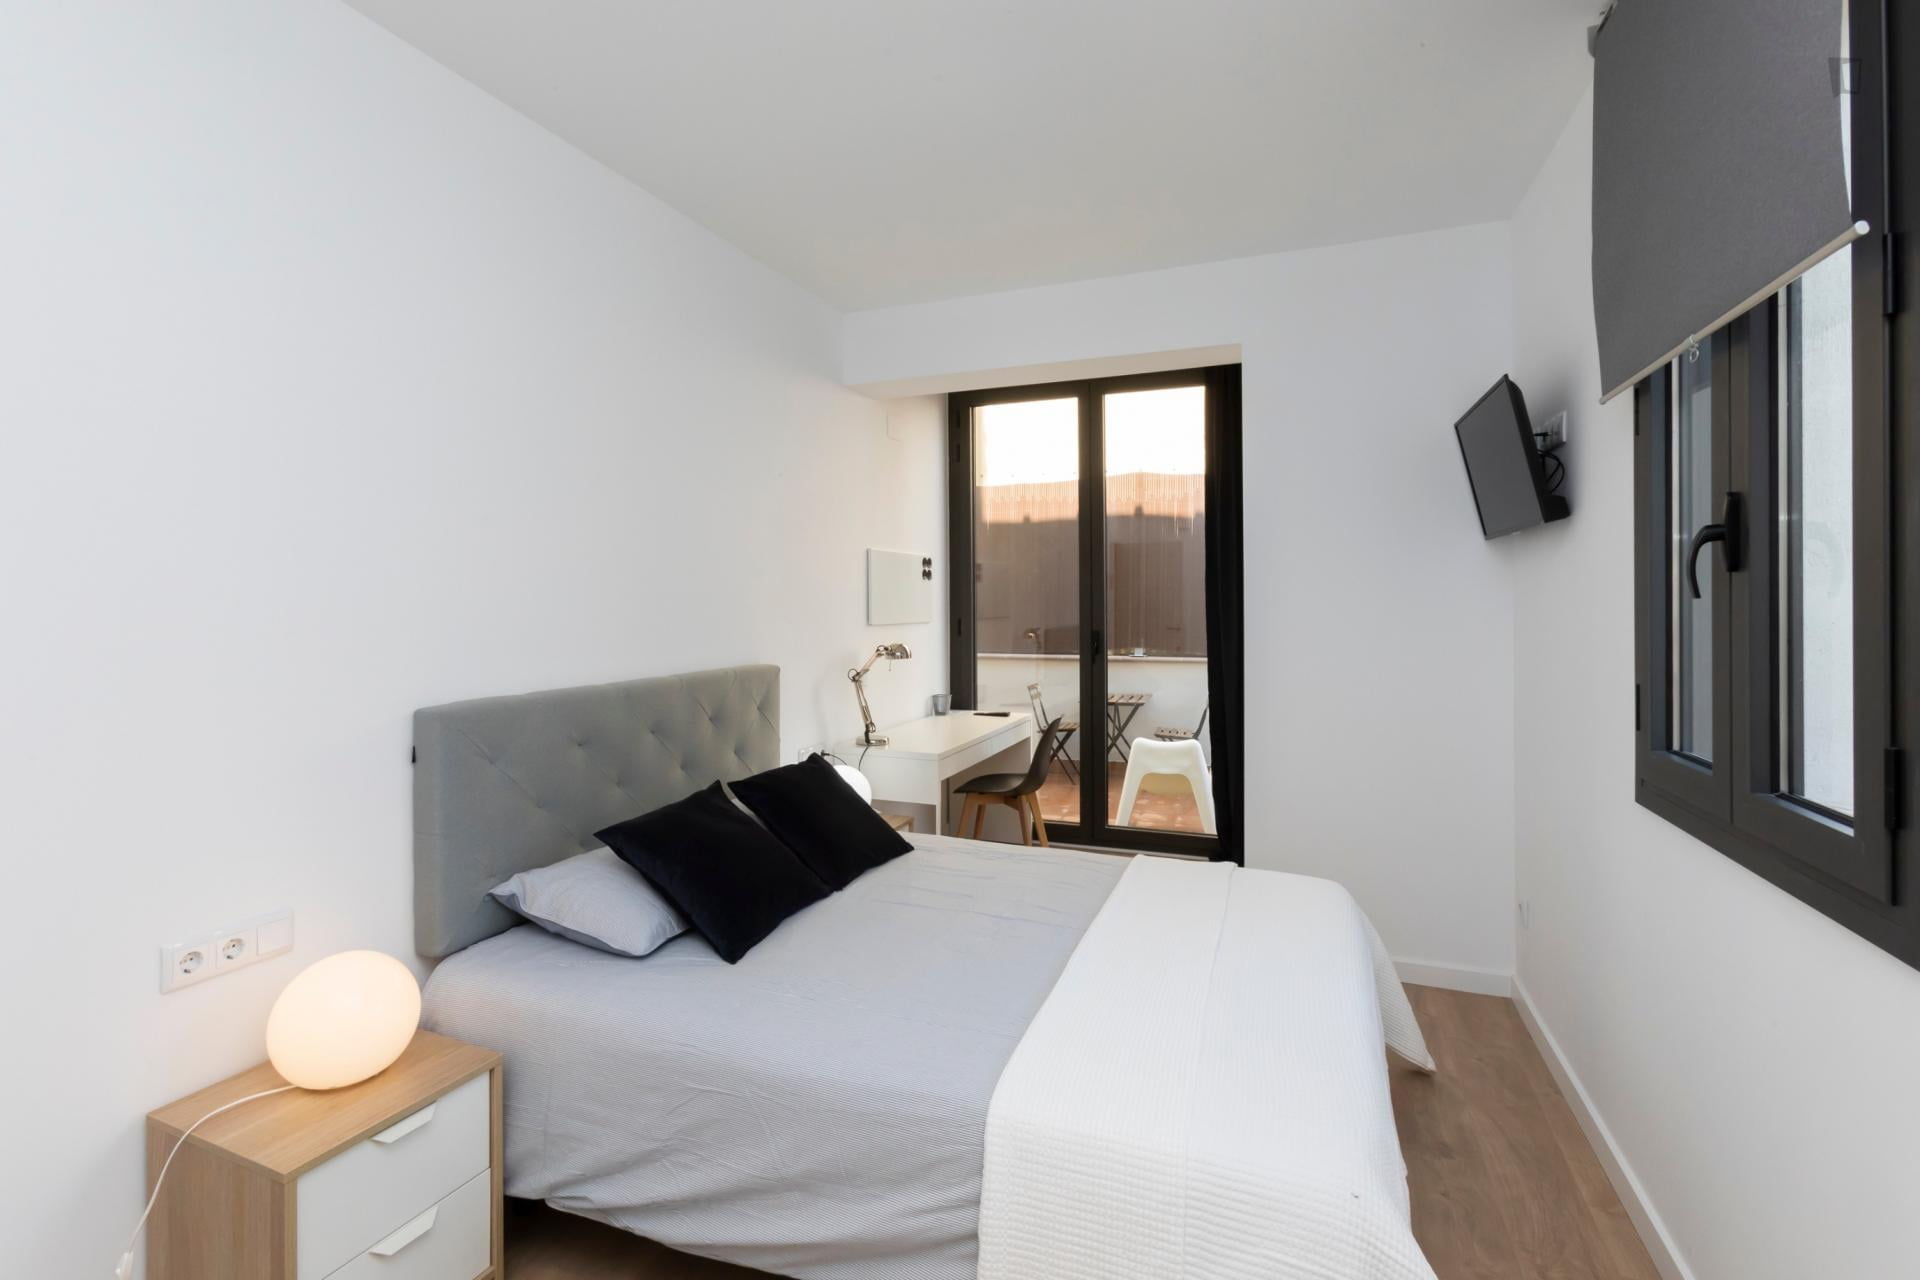 Llobregat - Double bedroom near Barcelona